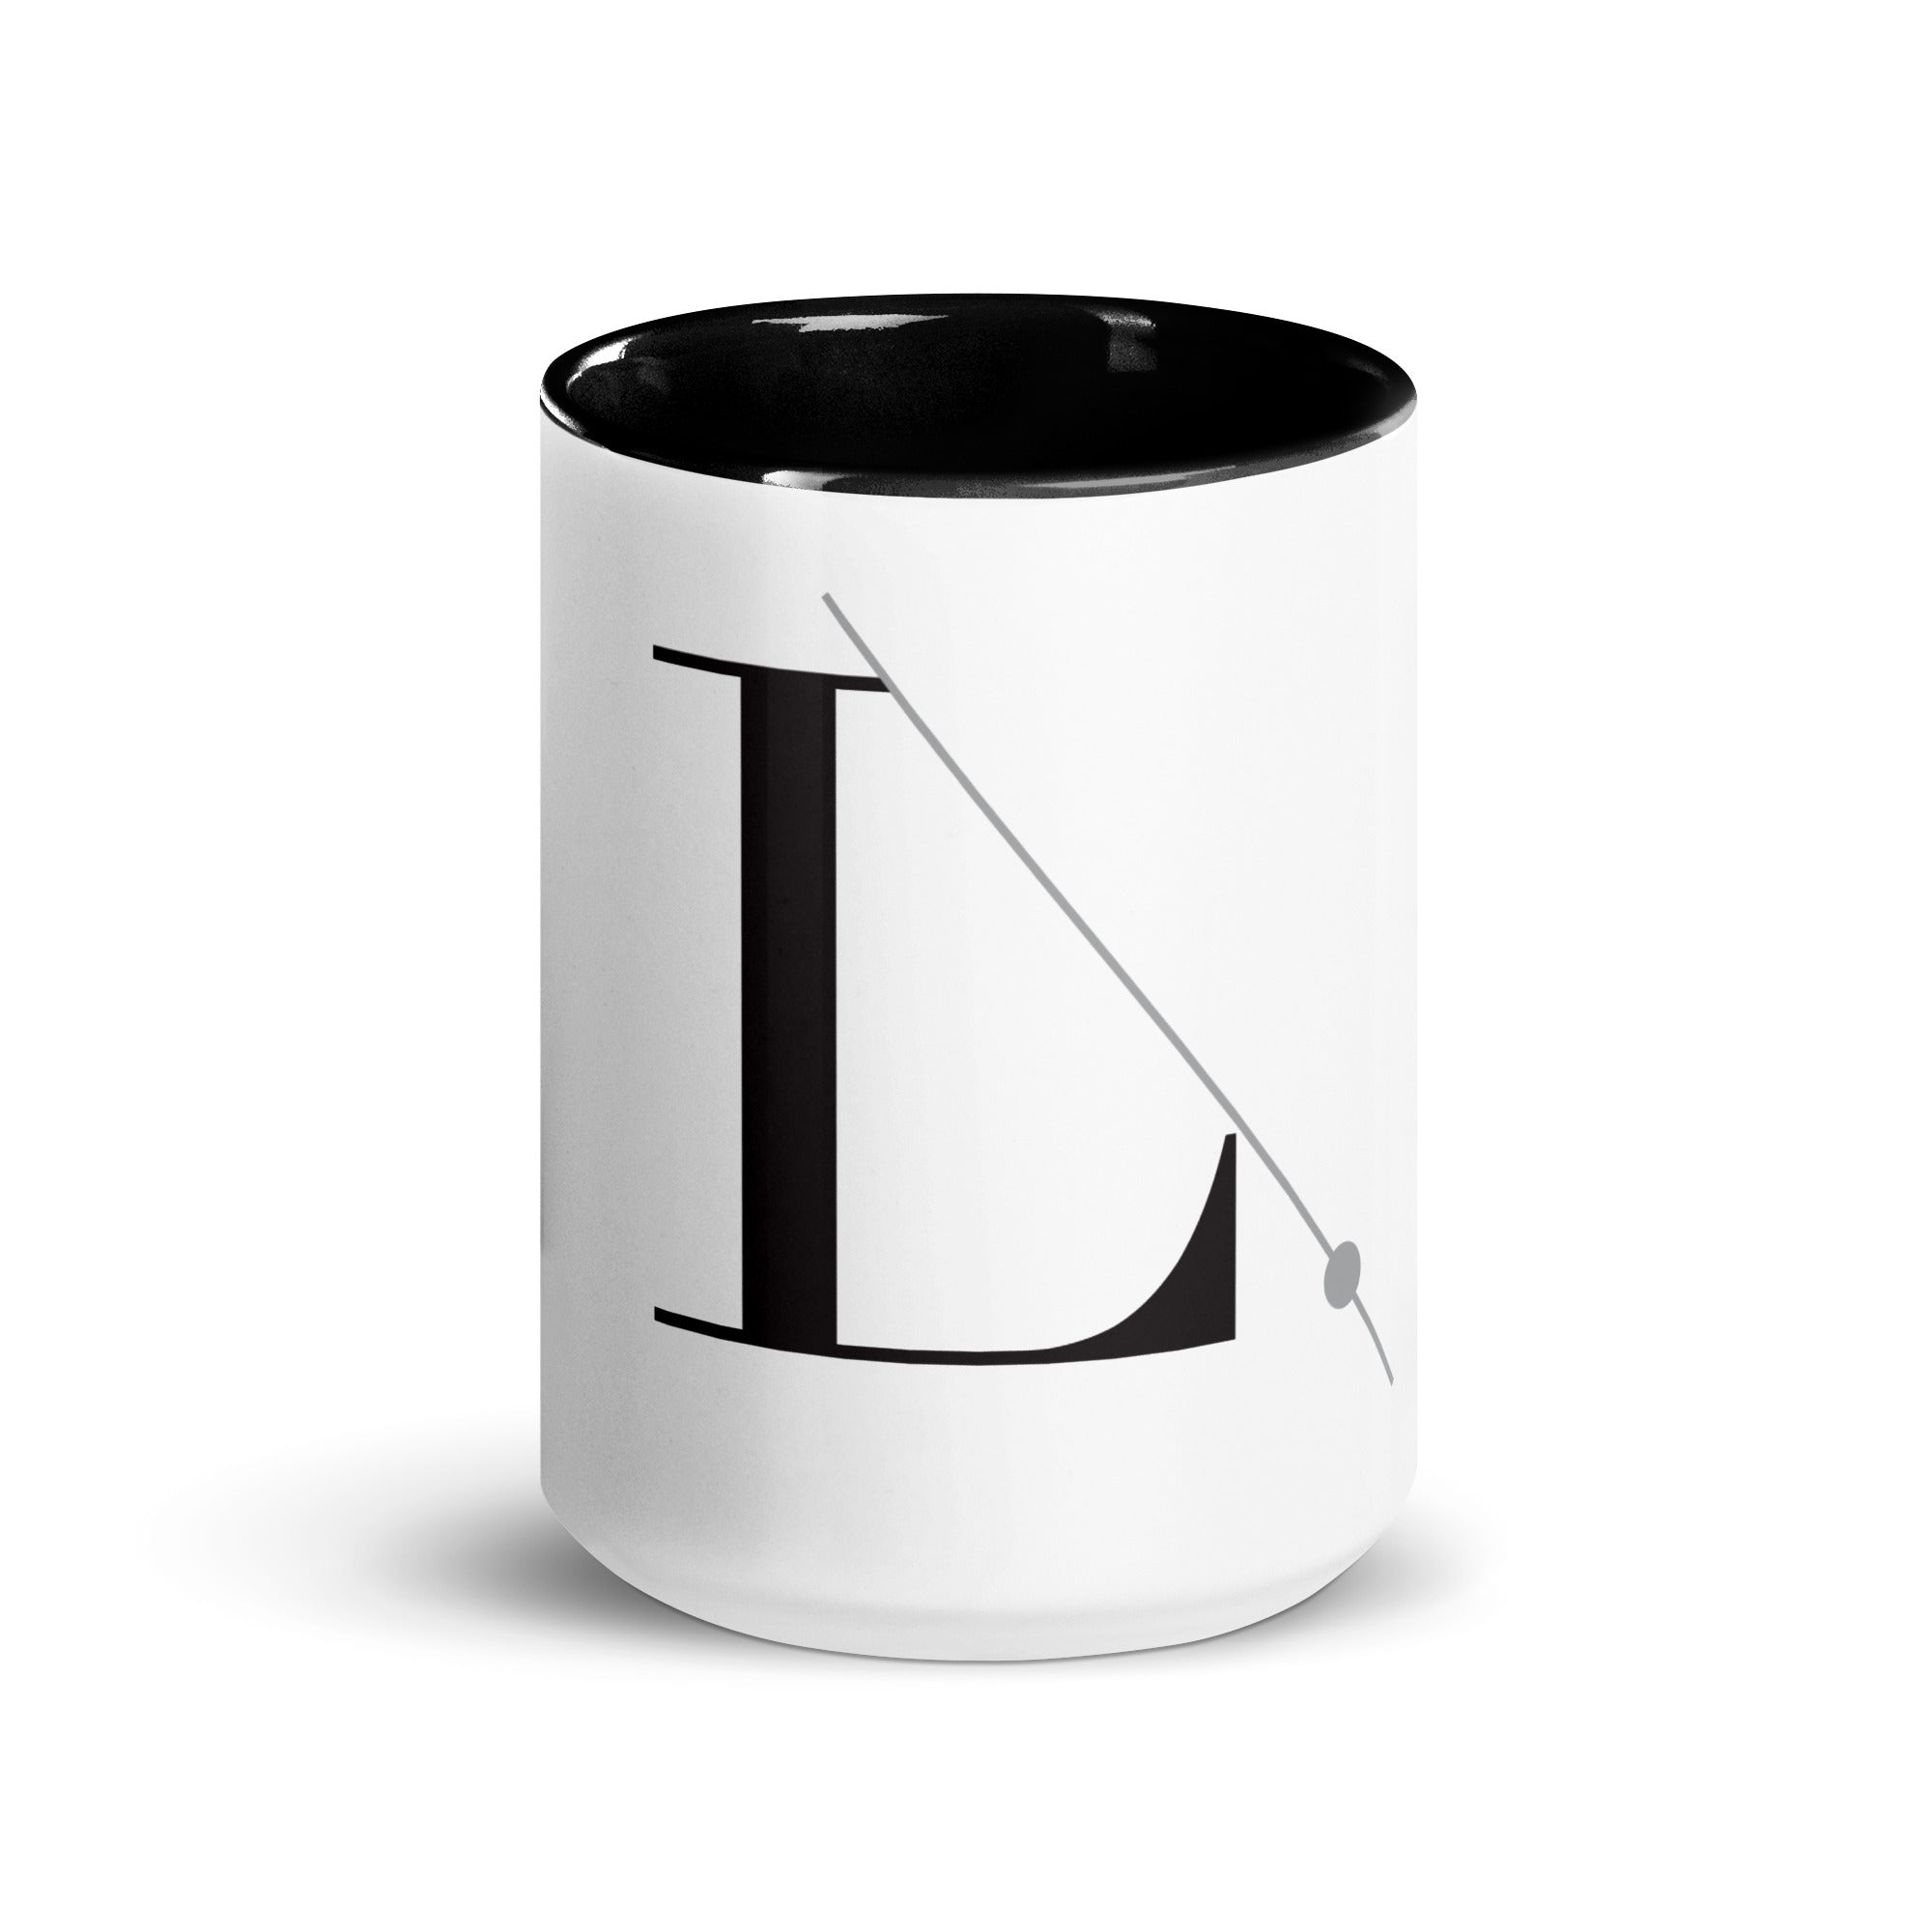 L Mug - Black inside and handle